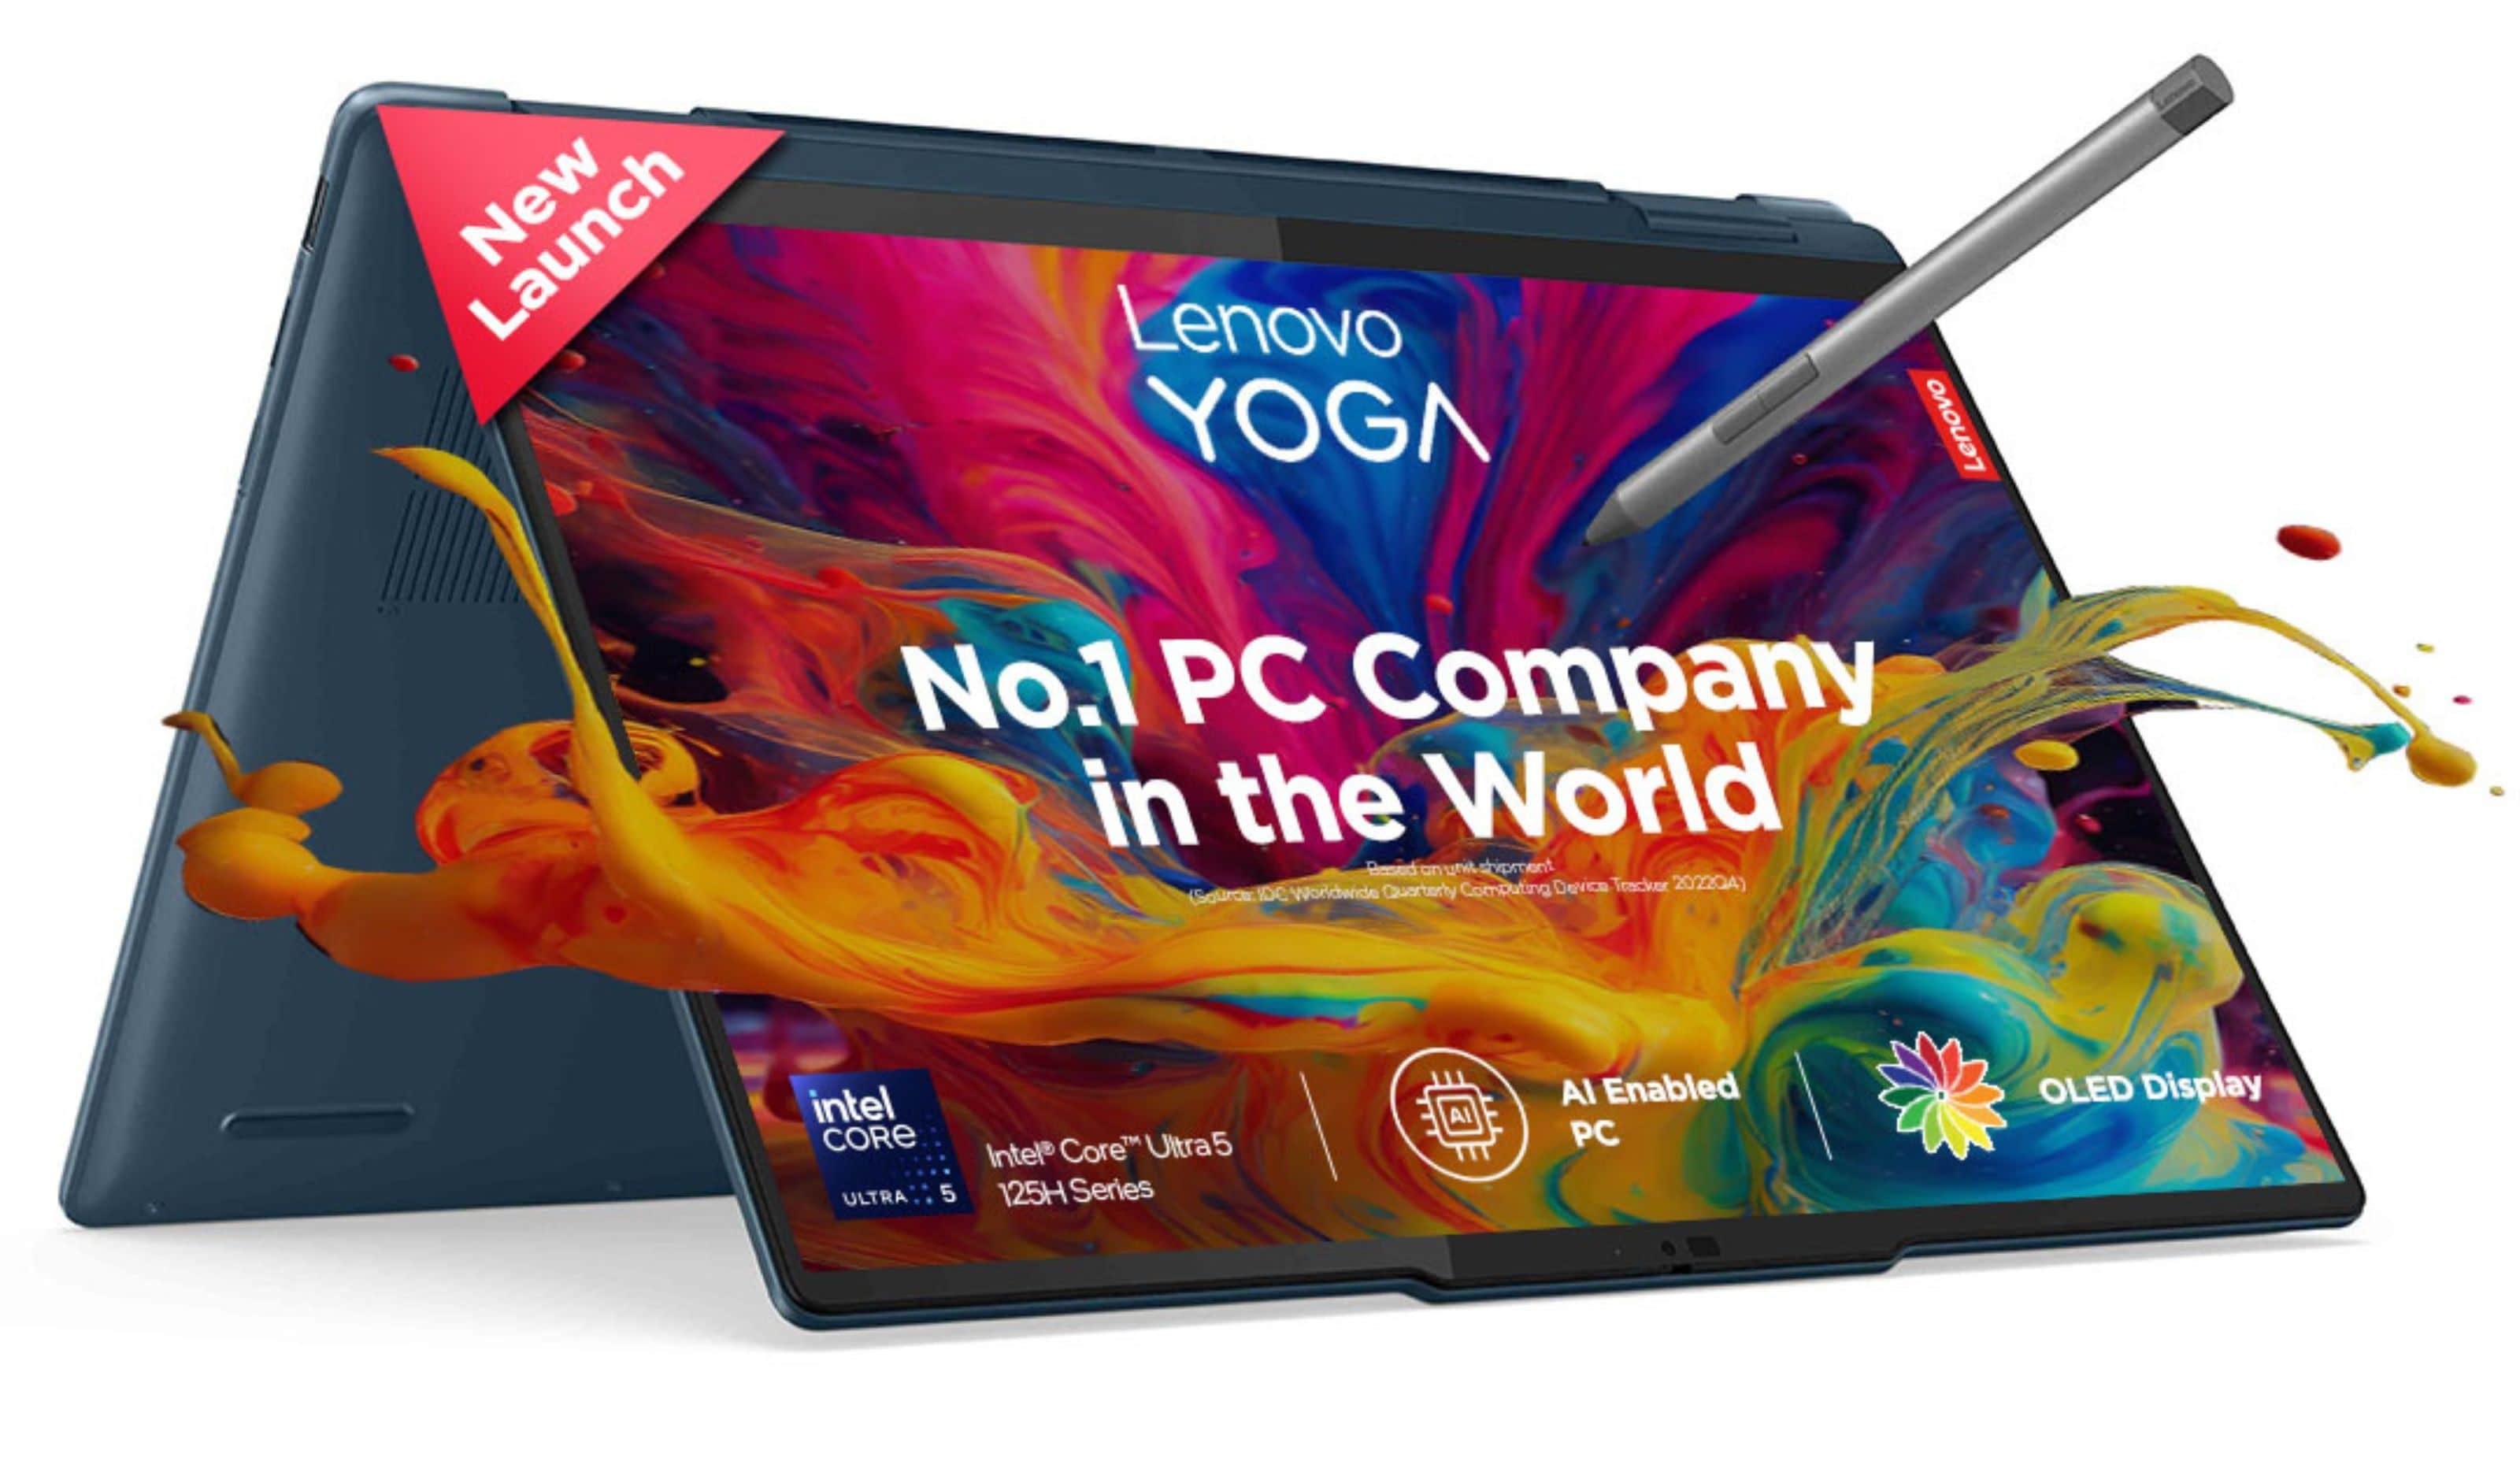 Yoga-7i-2in1-Intel-35.56cms-Core-Ultra-5.jpg